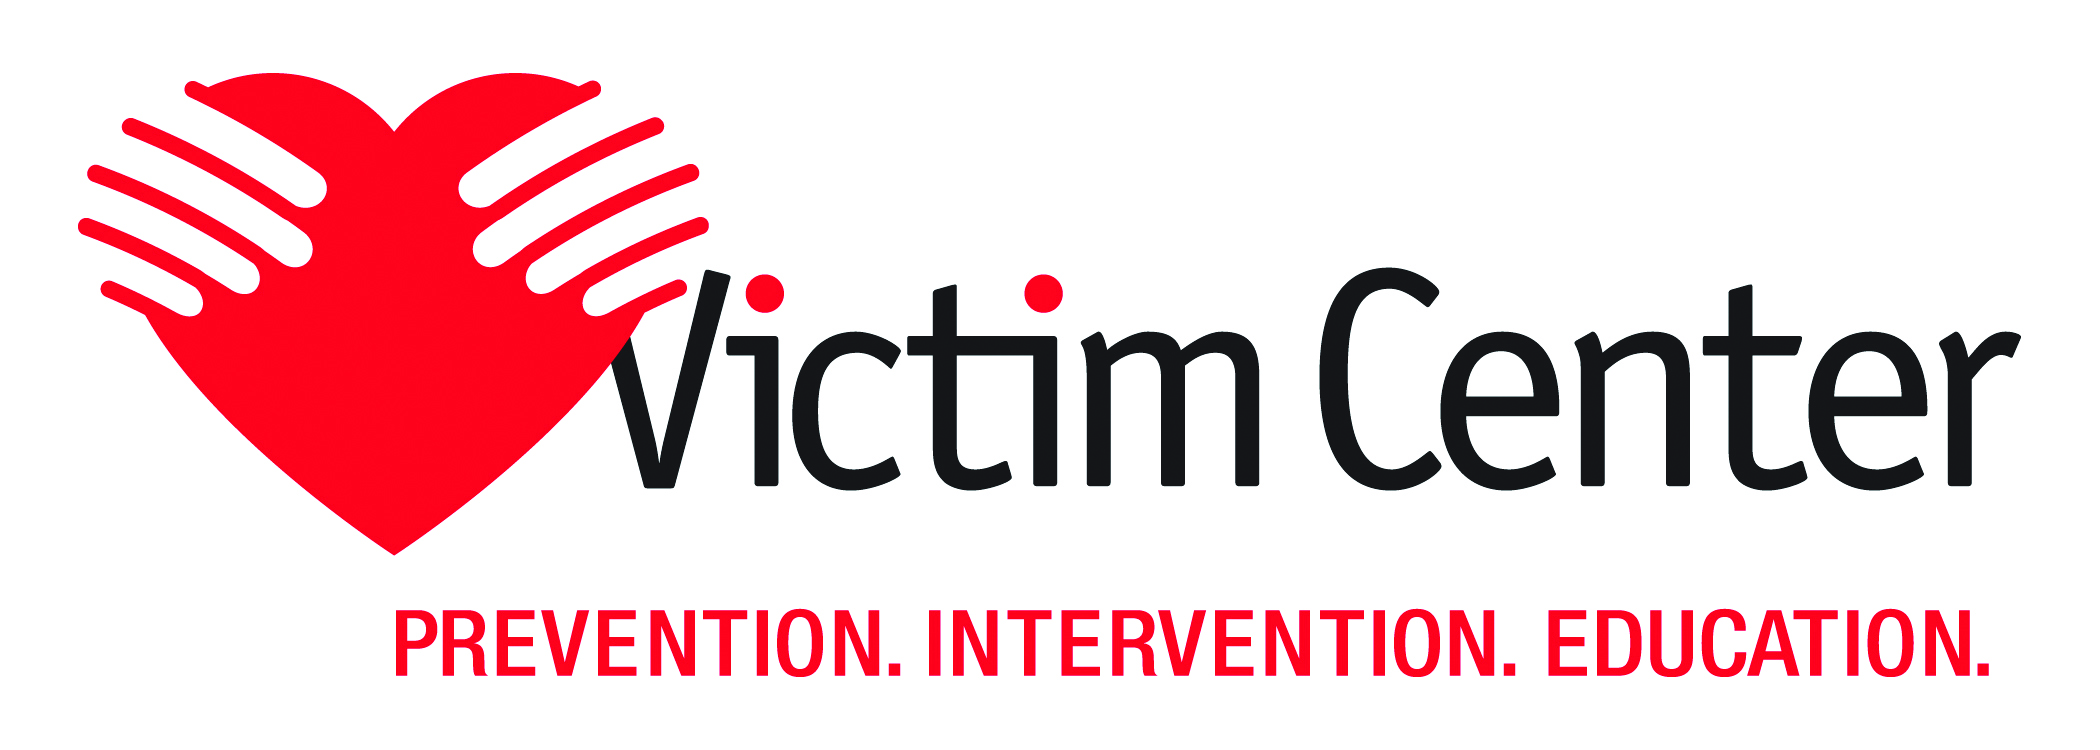 The Victim Center logo